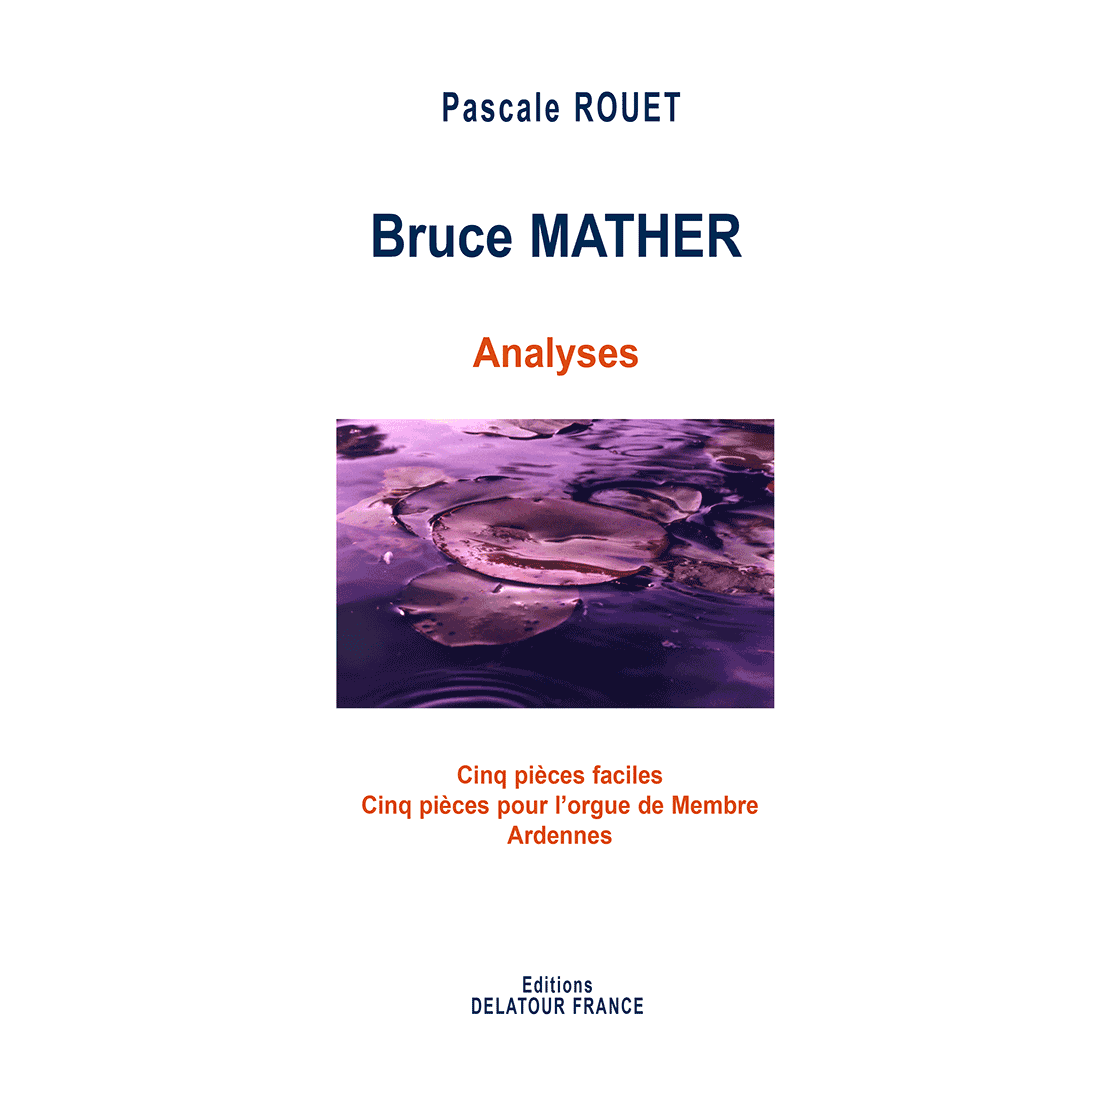 Analysis of organ works of Bruce MATHER